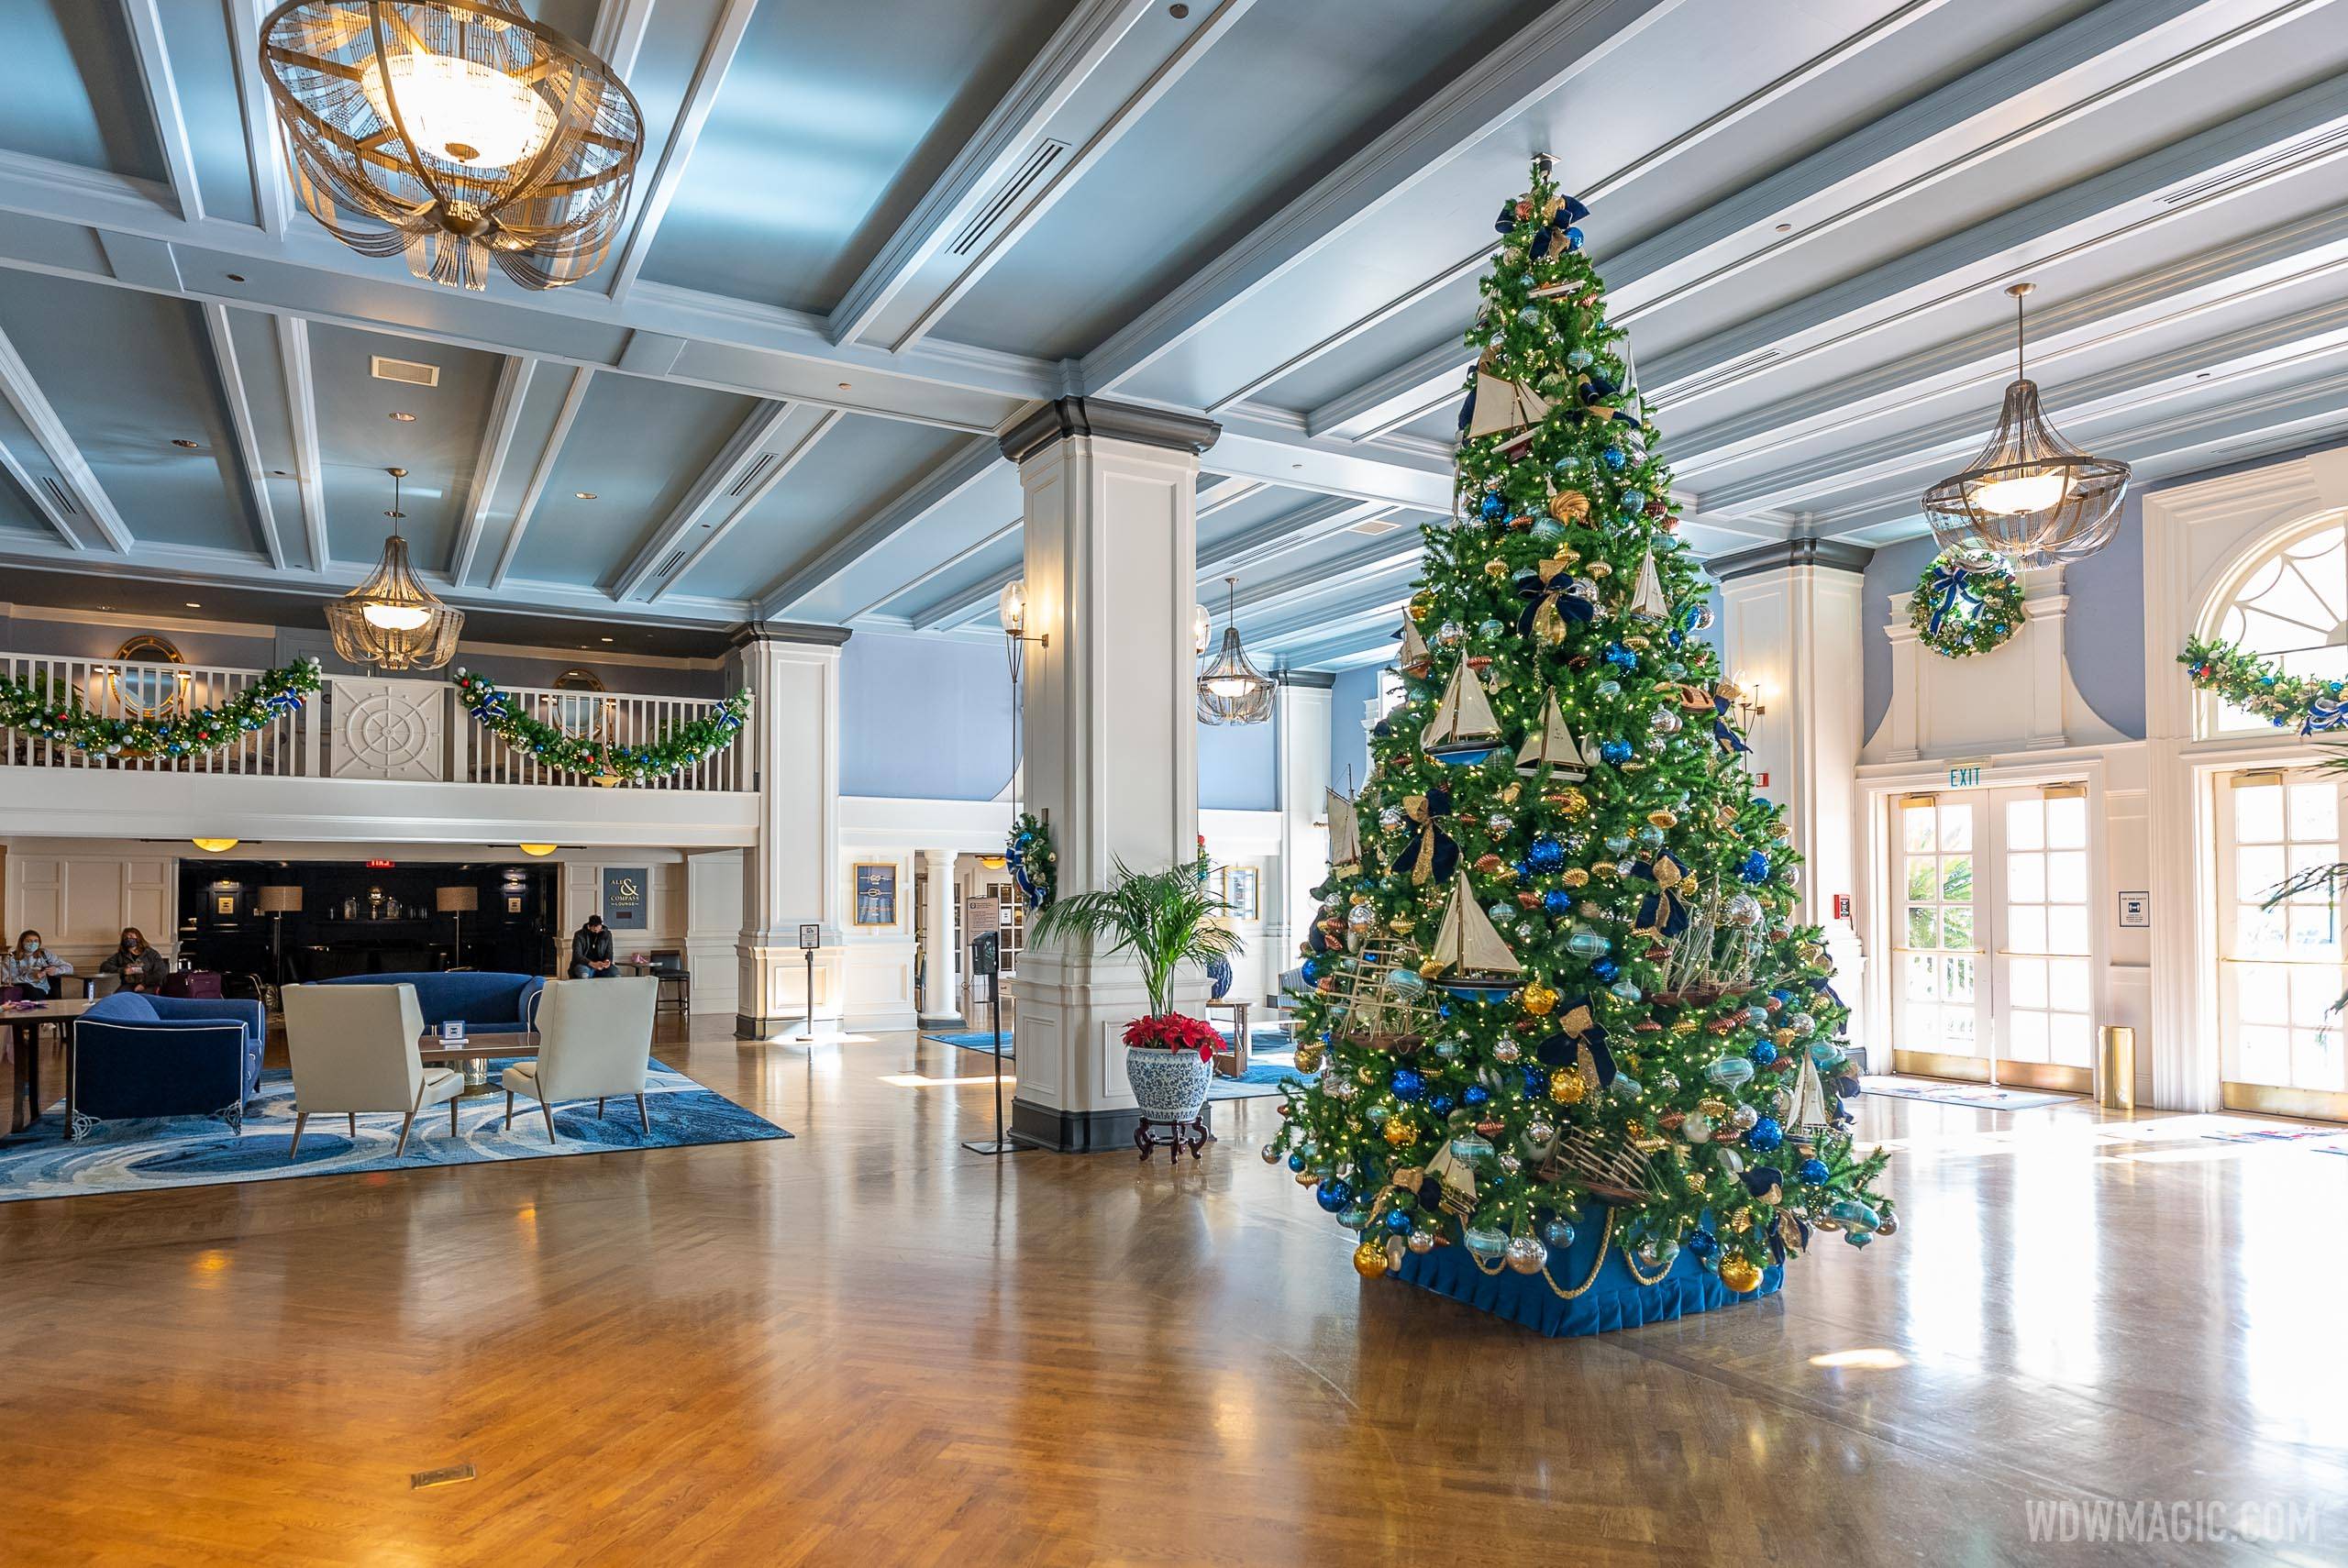 Yacht Club Resort Christmas Holiday decor 2020